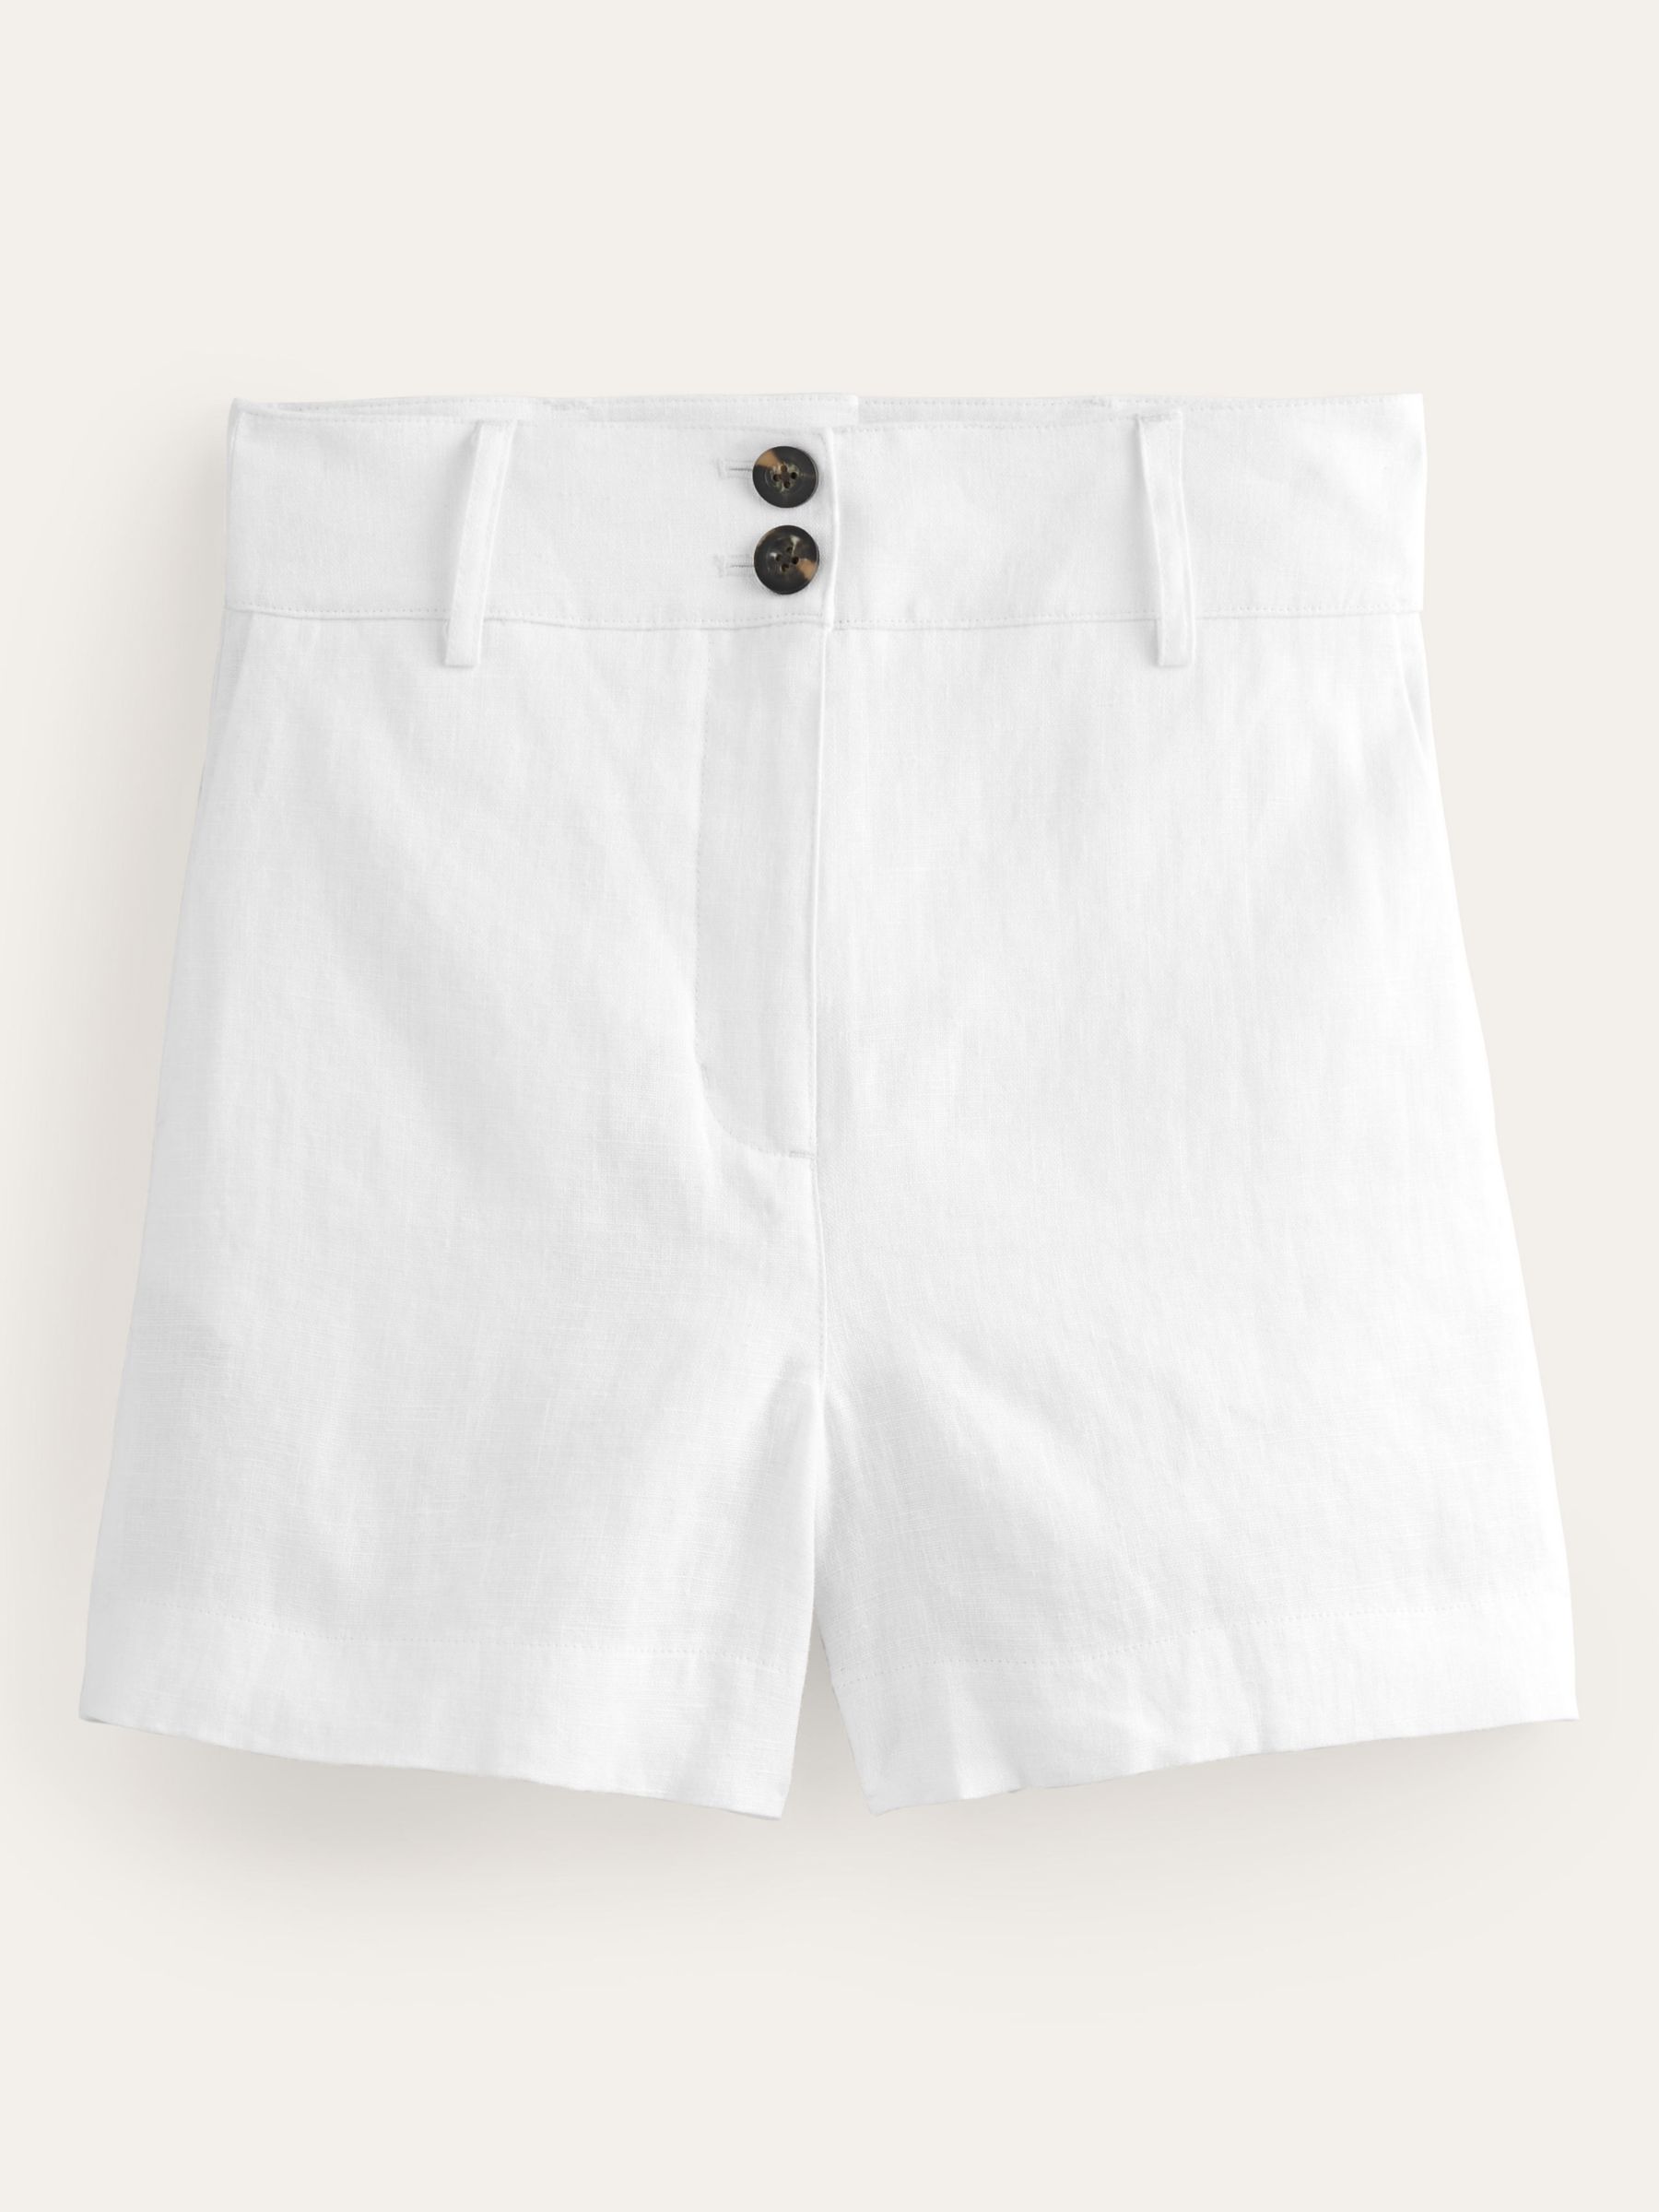 Boden Westbourne Linen Shorts, White, 18